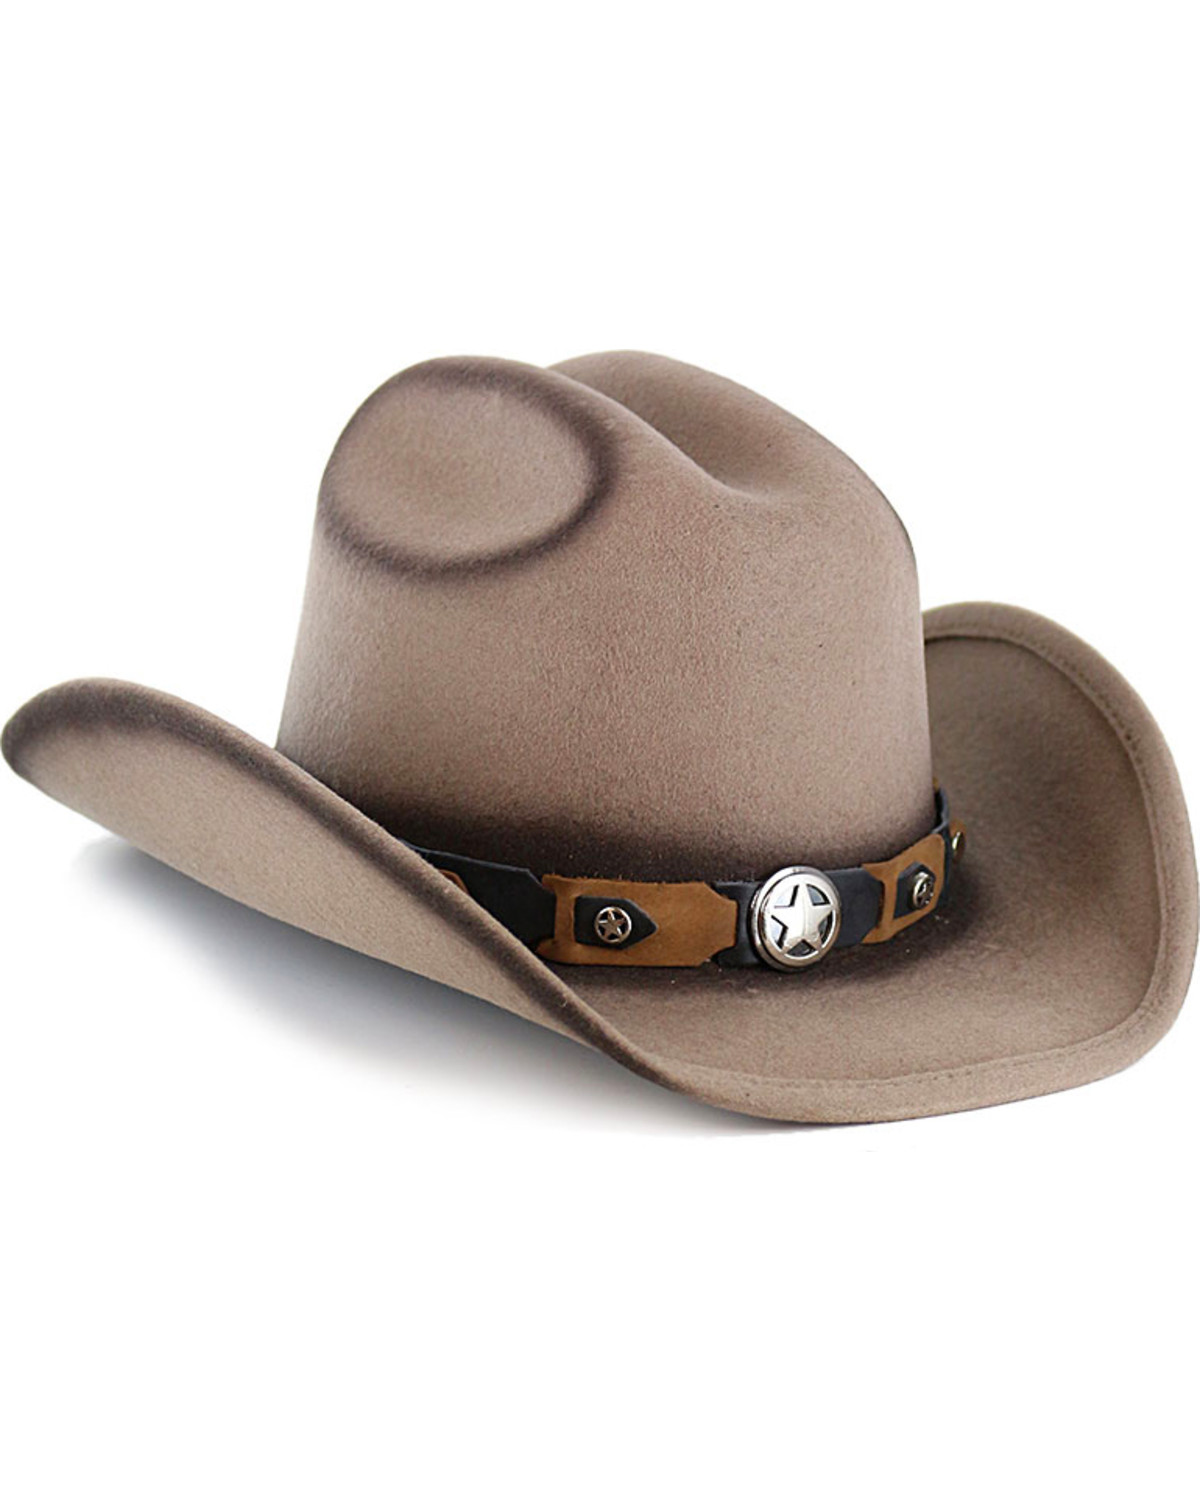 Cody James Kids' Yearling Felt Cowboy Hat